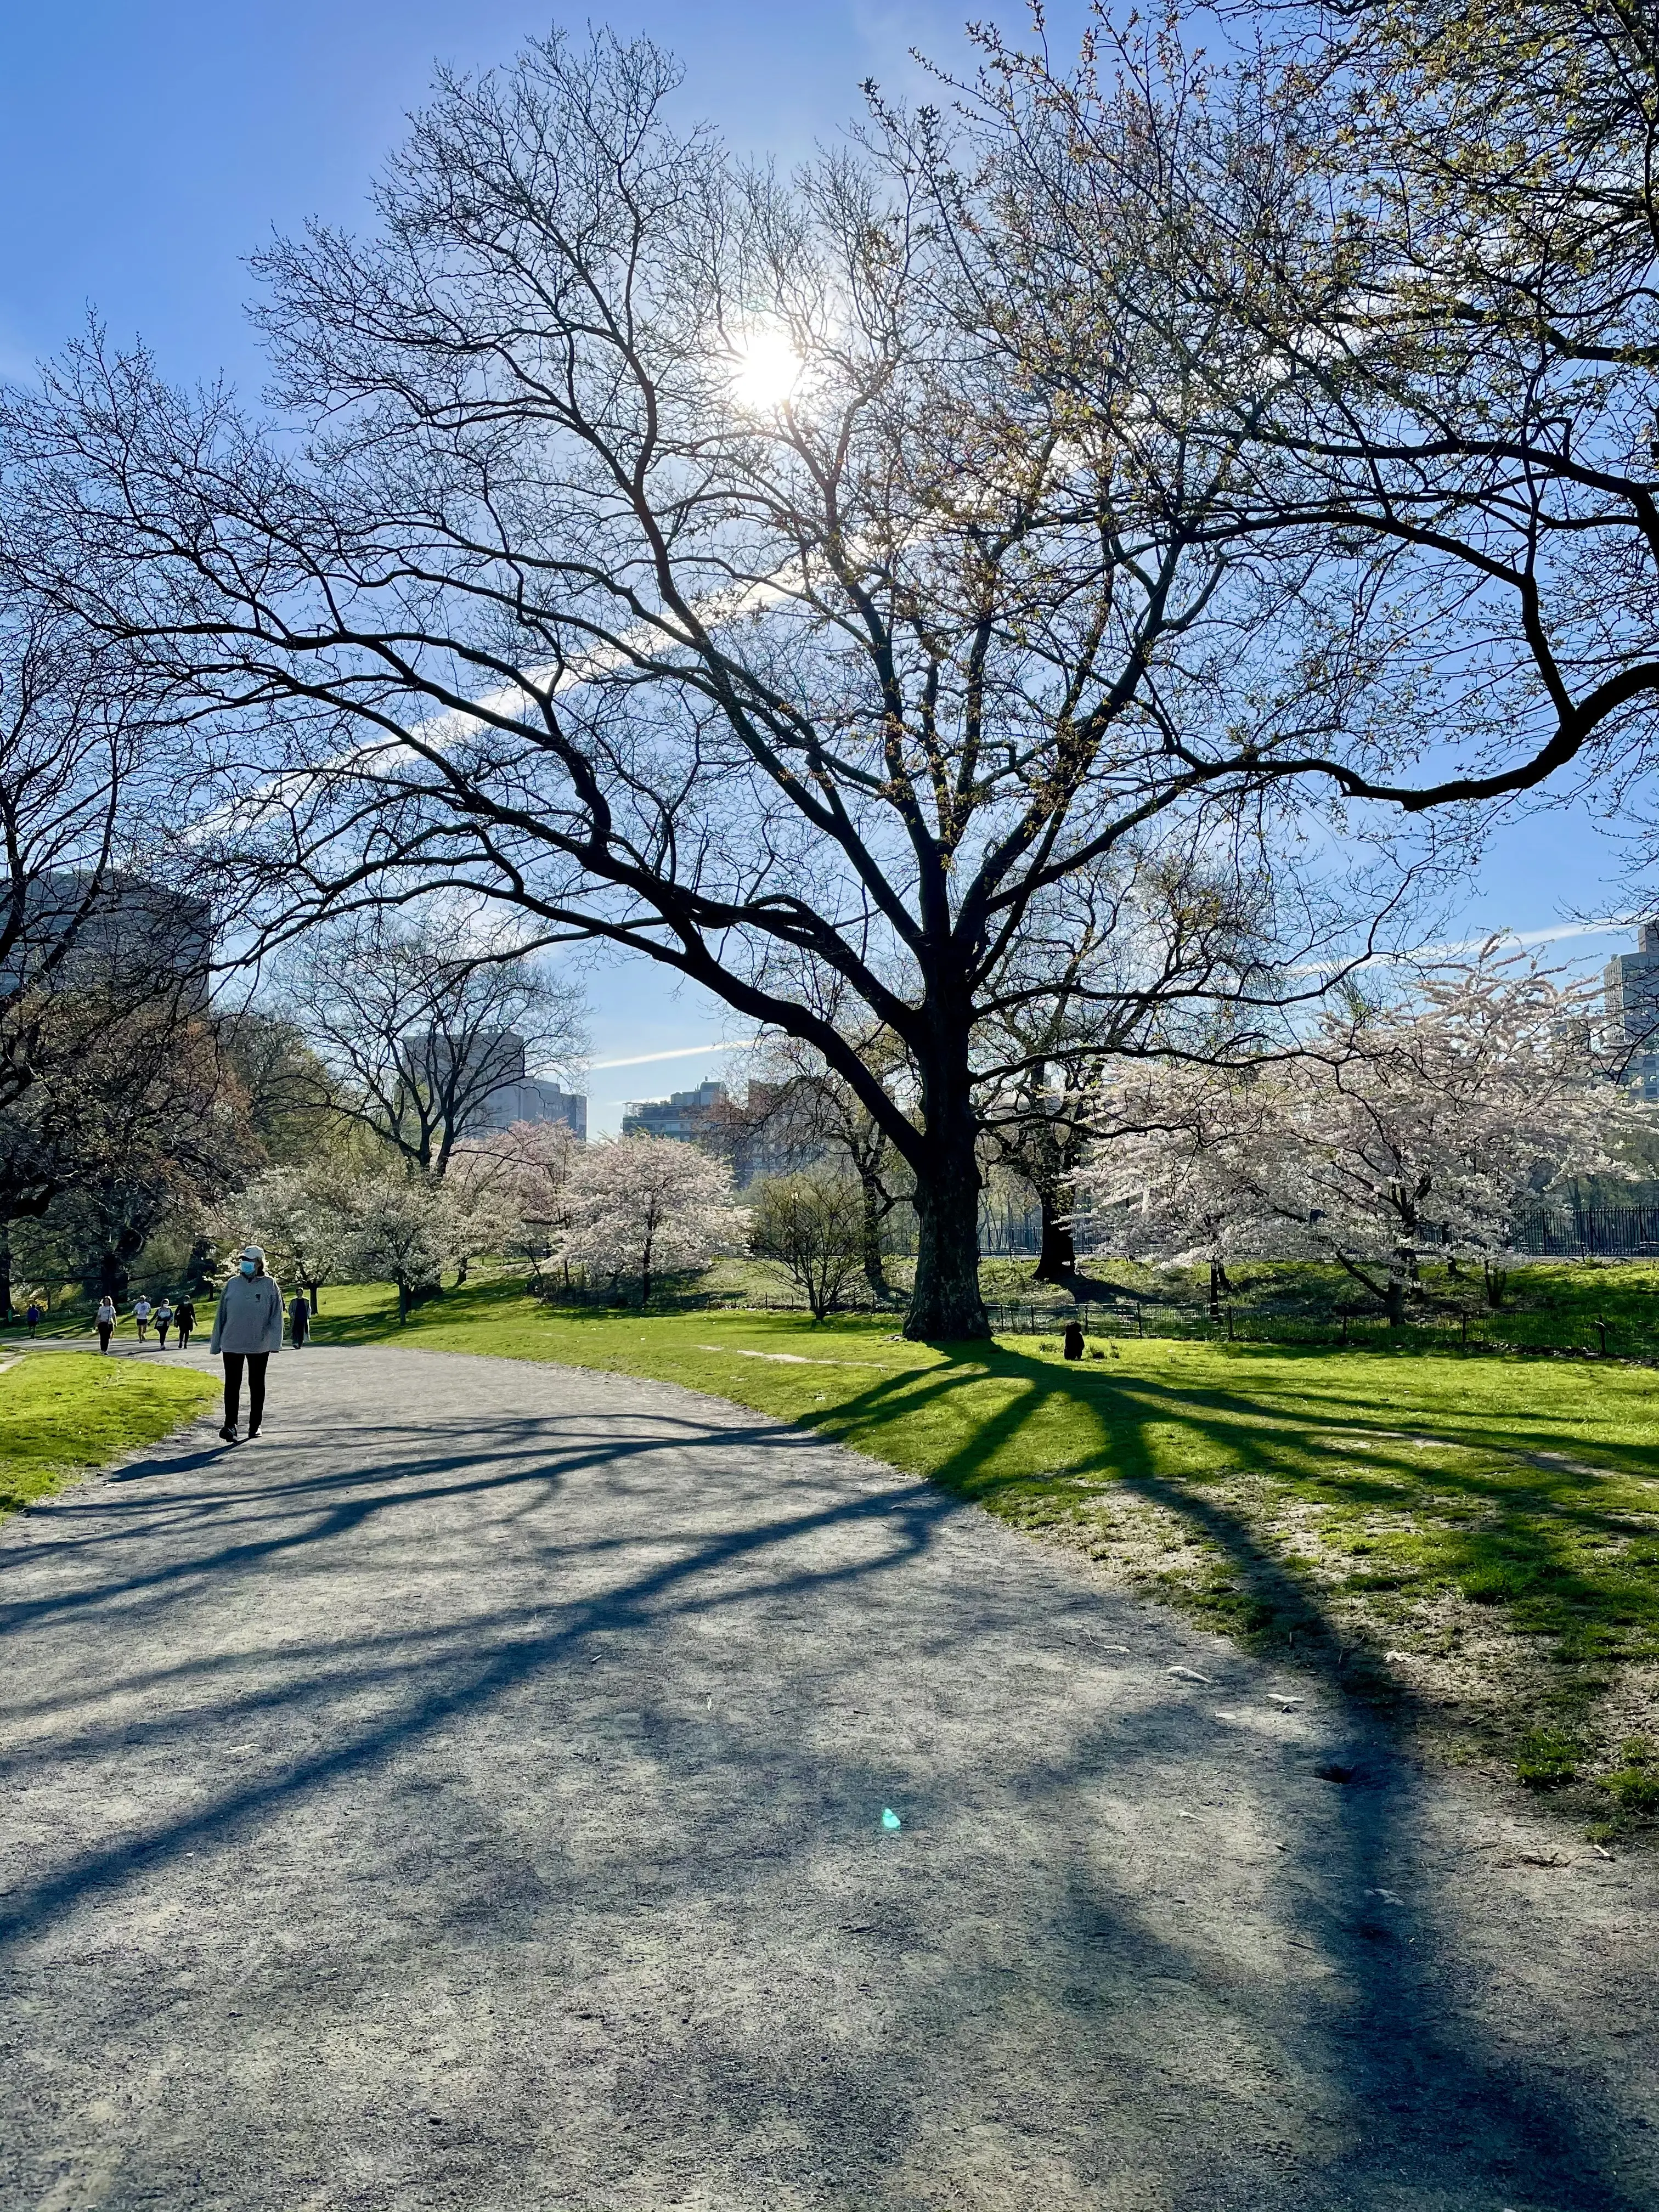 _Lauren_ Early-Spring Central Park on Wednesday (near the reservoir)